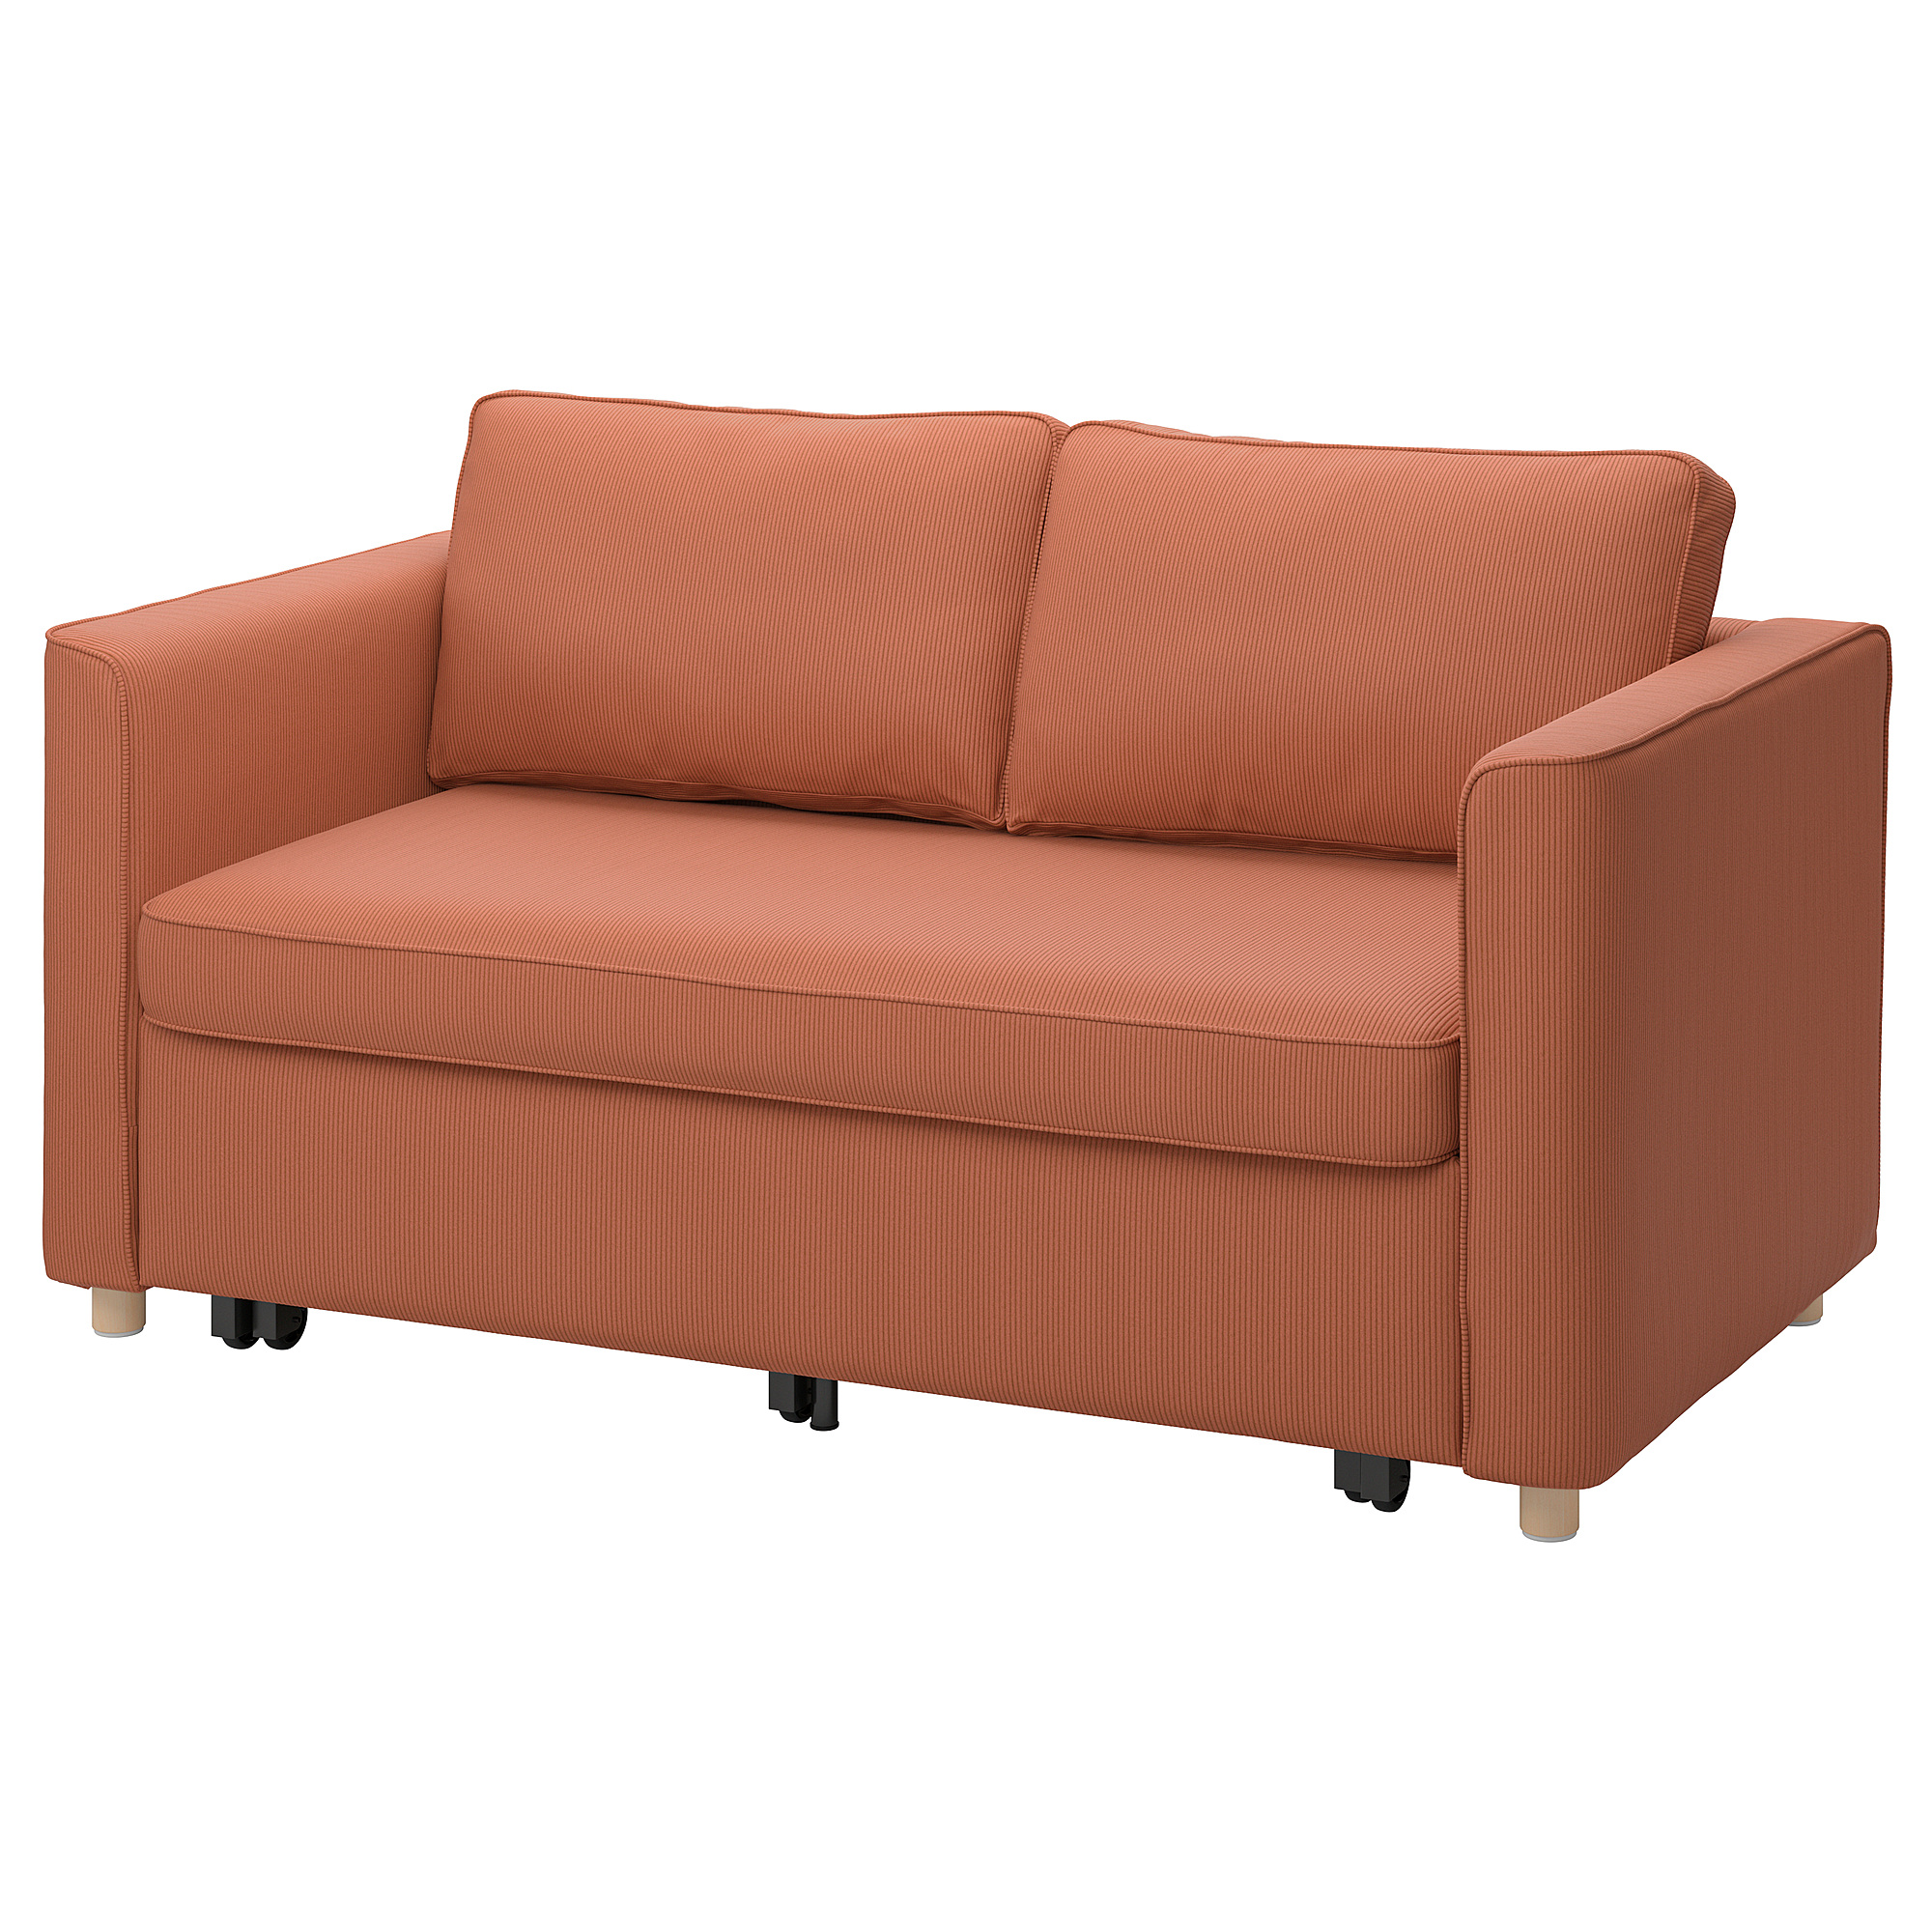 PÄRUP 2-seat sofa-bed